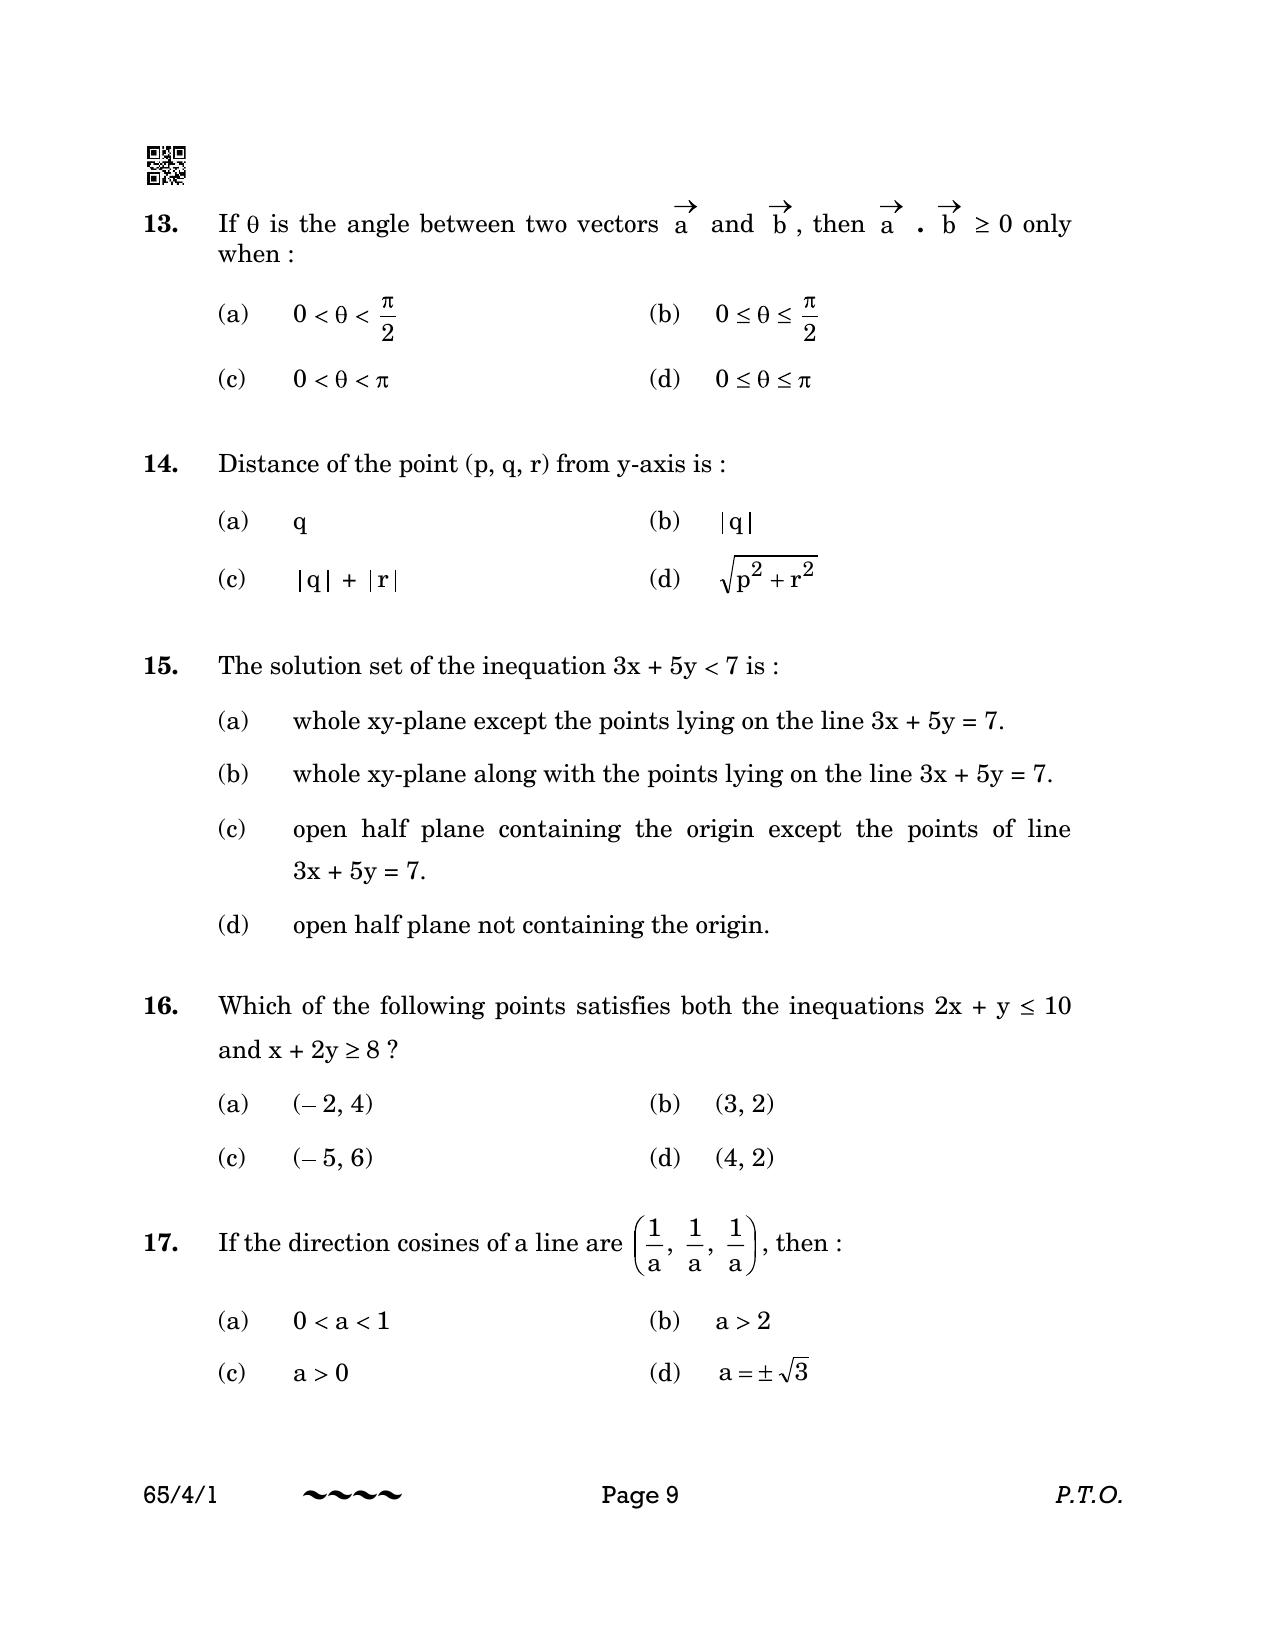 CBSE Class 12 65-4-1 MATHEMATICS 2023 Question Paper - Page 9